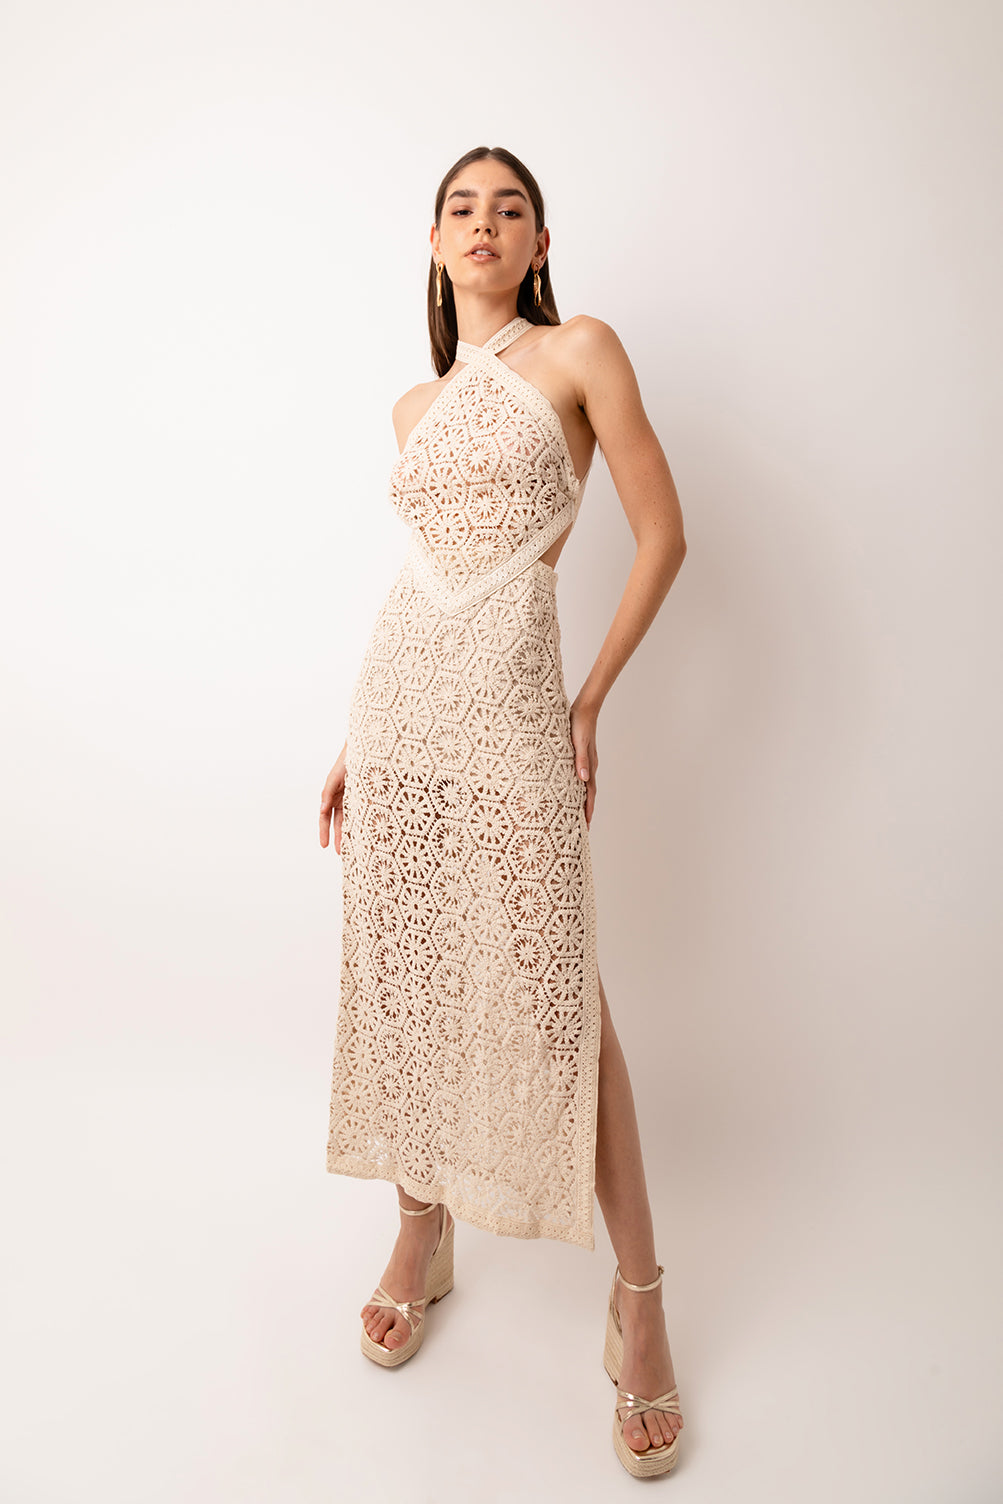 Tuscany Beige Crochet Lace Maxi Dress